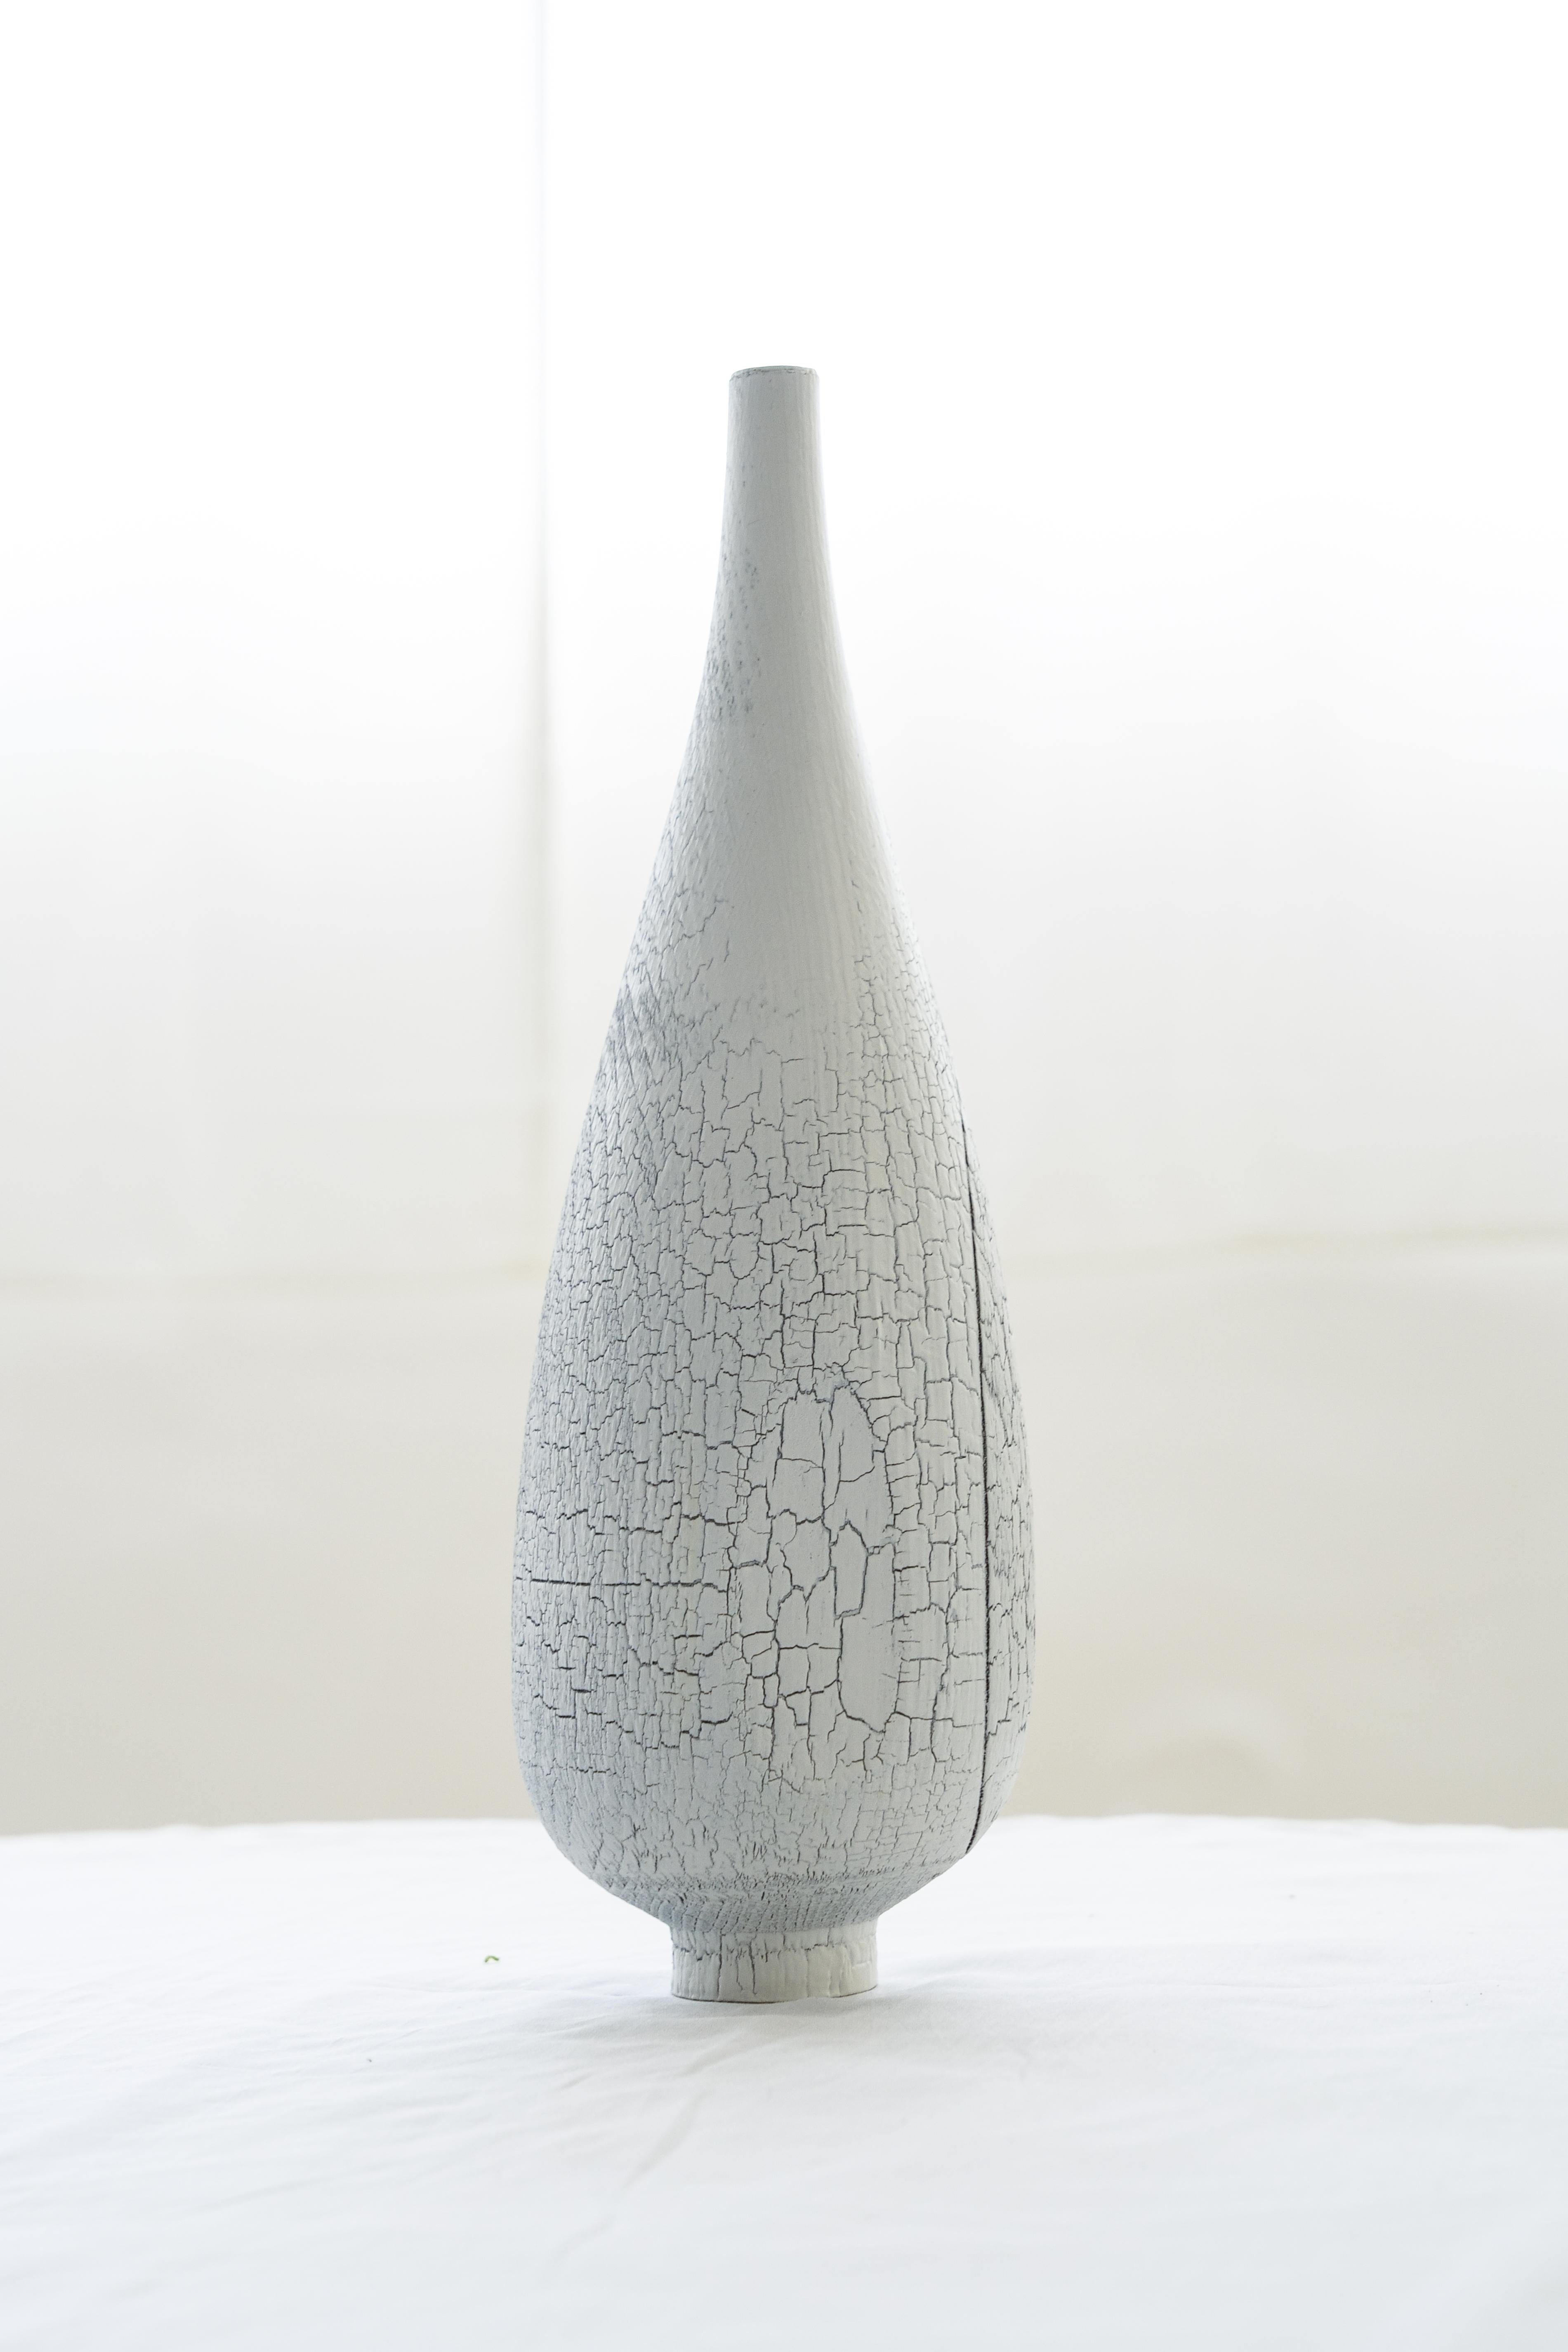 Other Large White Burnt Beech Vase by Daniel Elkayam For Sale